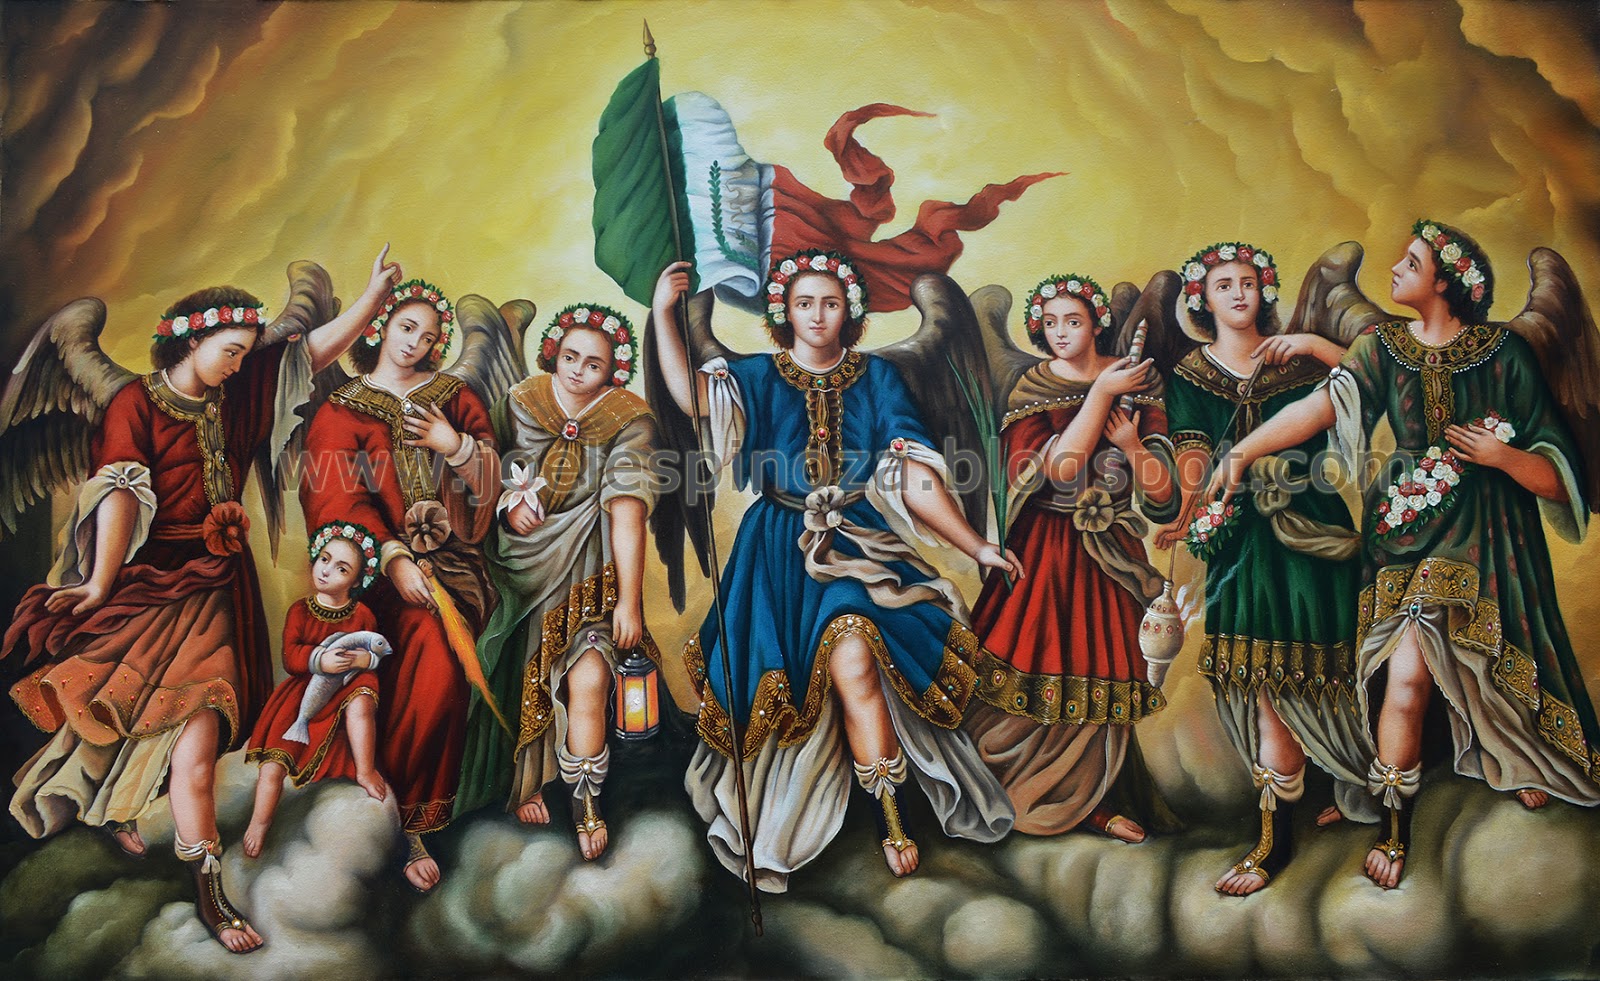 Los 7 Arcangeles - Wallpaper-img.com